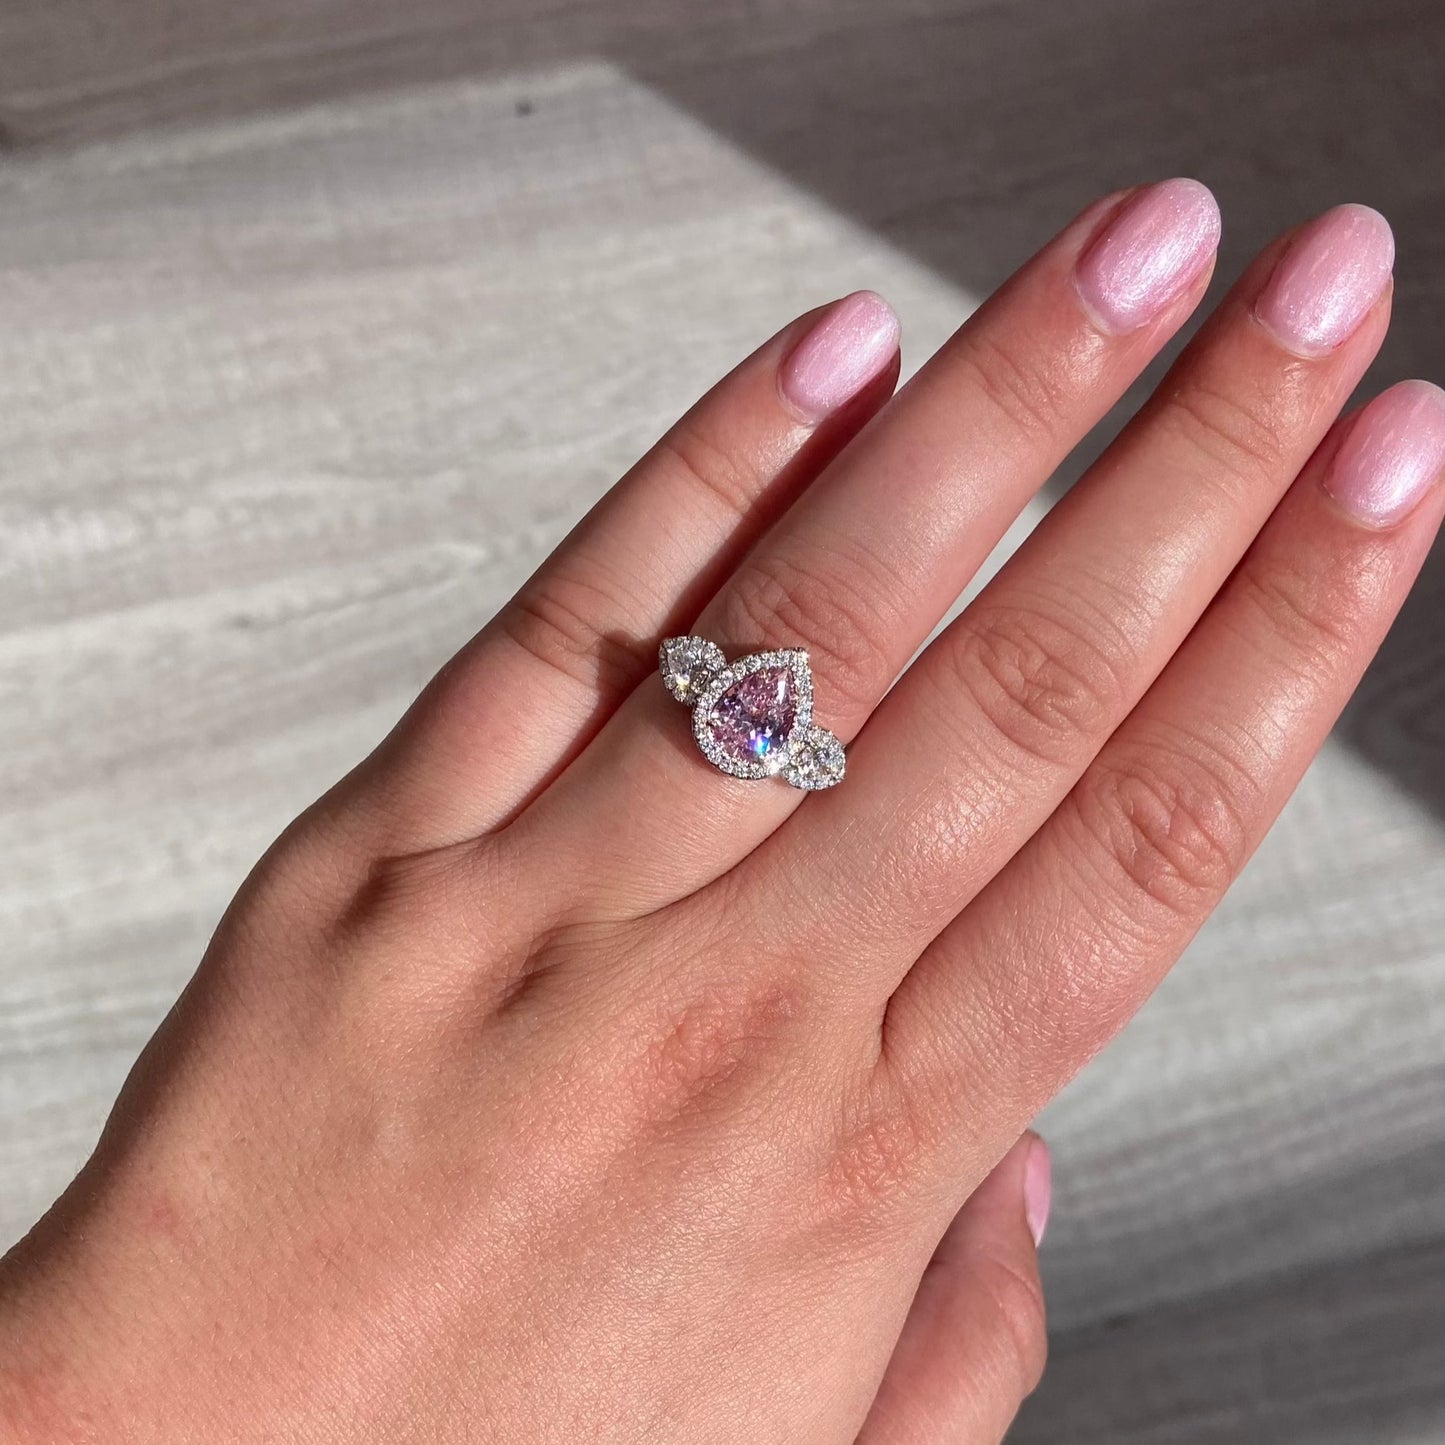 1.5 carat Light pink pear shape diamond ring